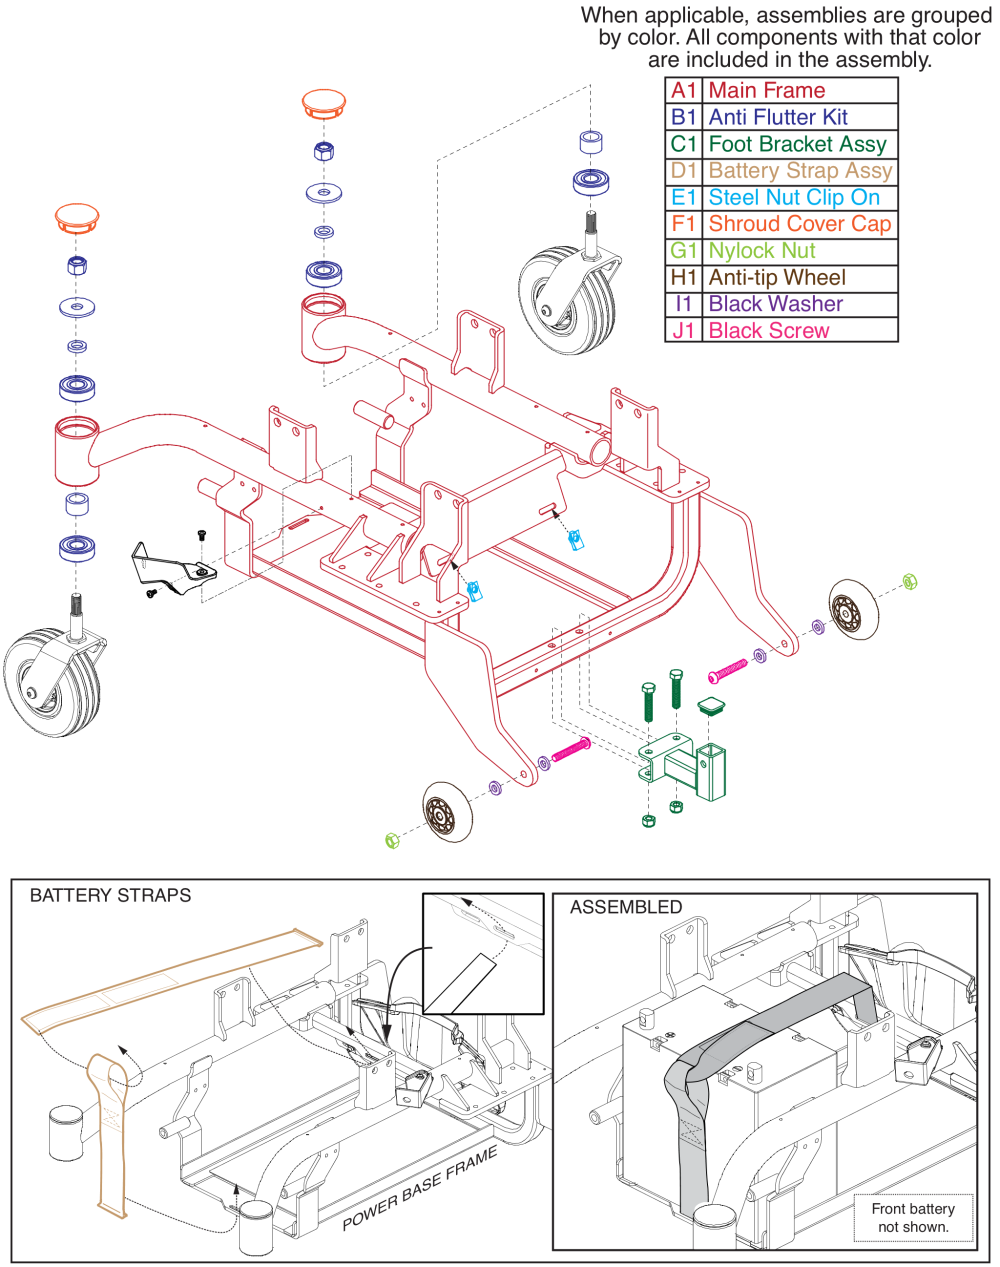 Main Frame Assembly, Elite 14 parts diagram